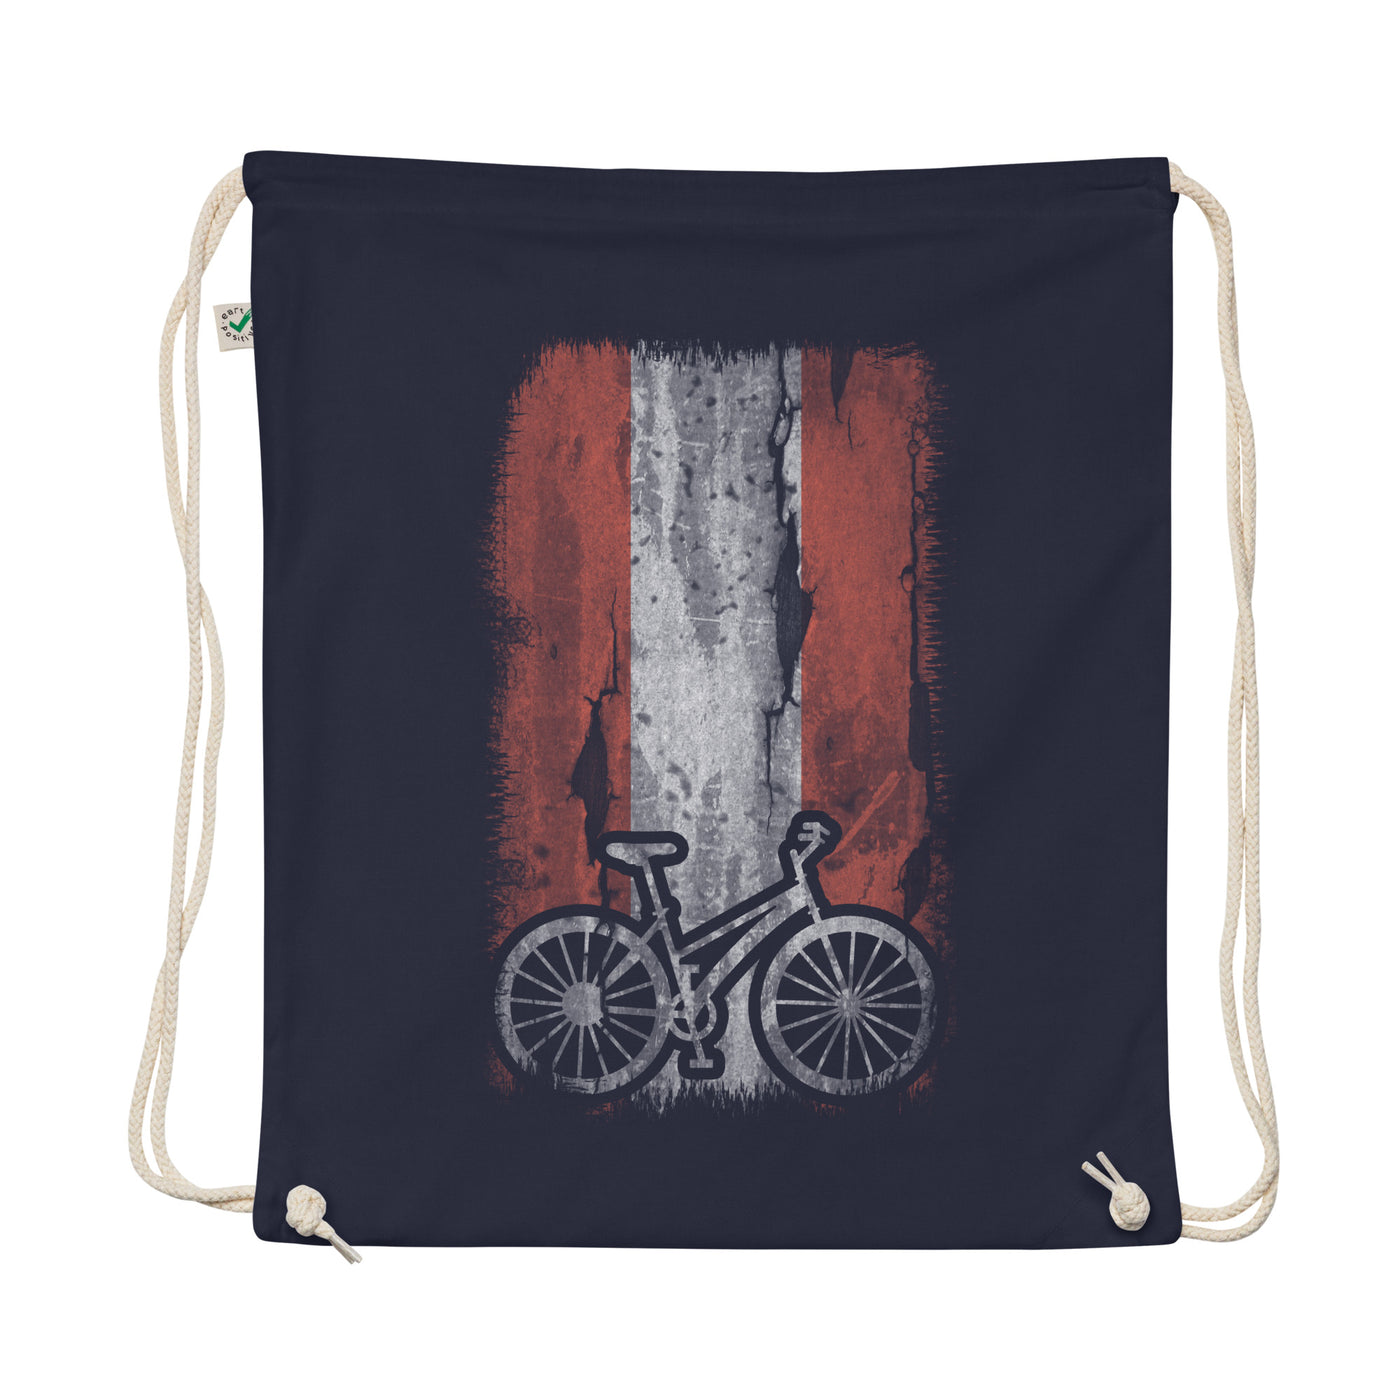 Austria Flag And Cycling - Organic Turnbeutel fahrrad